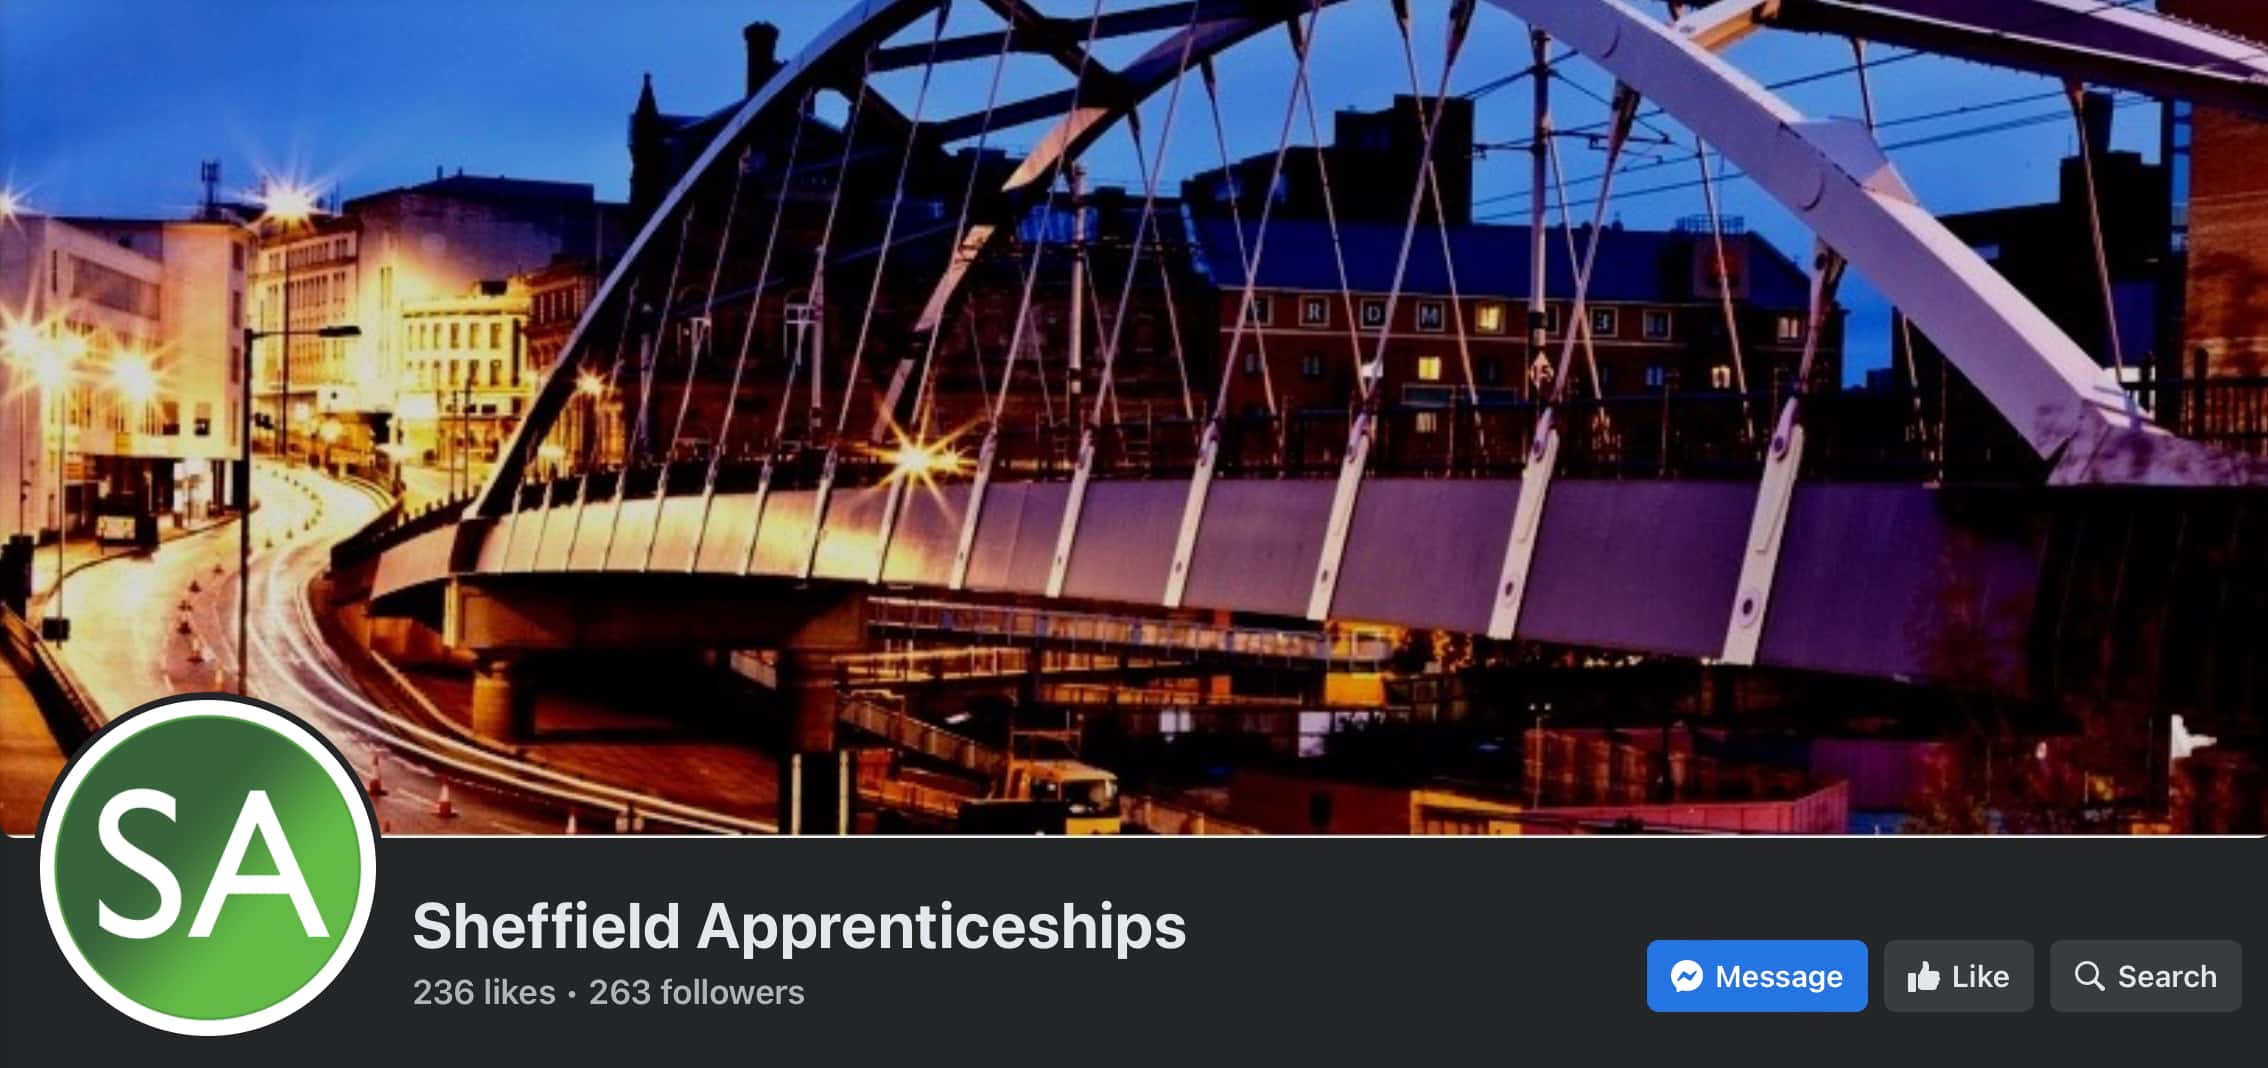 Sheffield Apprenticeships Facebook page screenshot